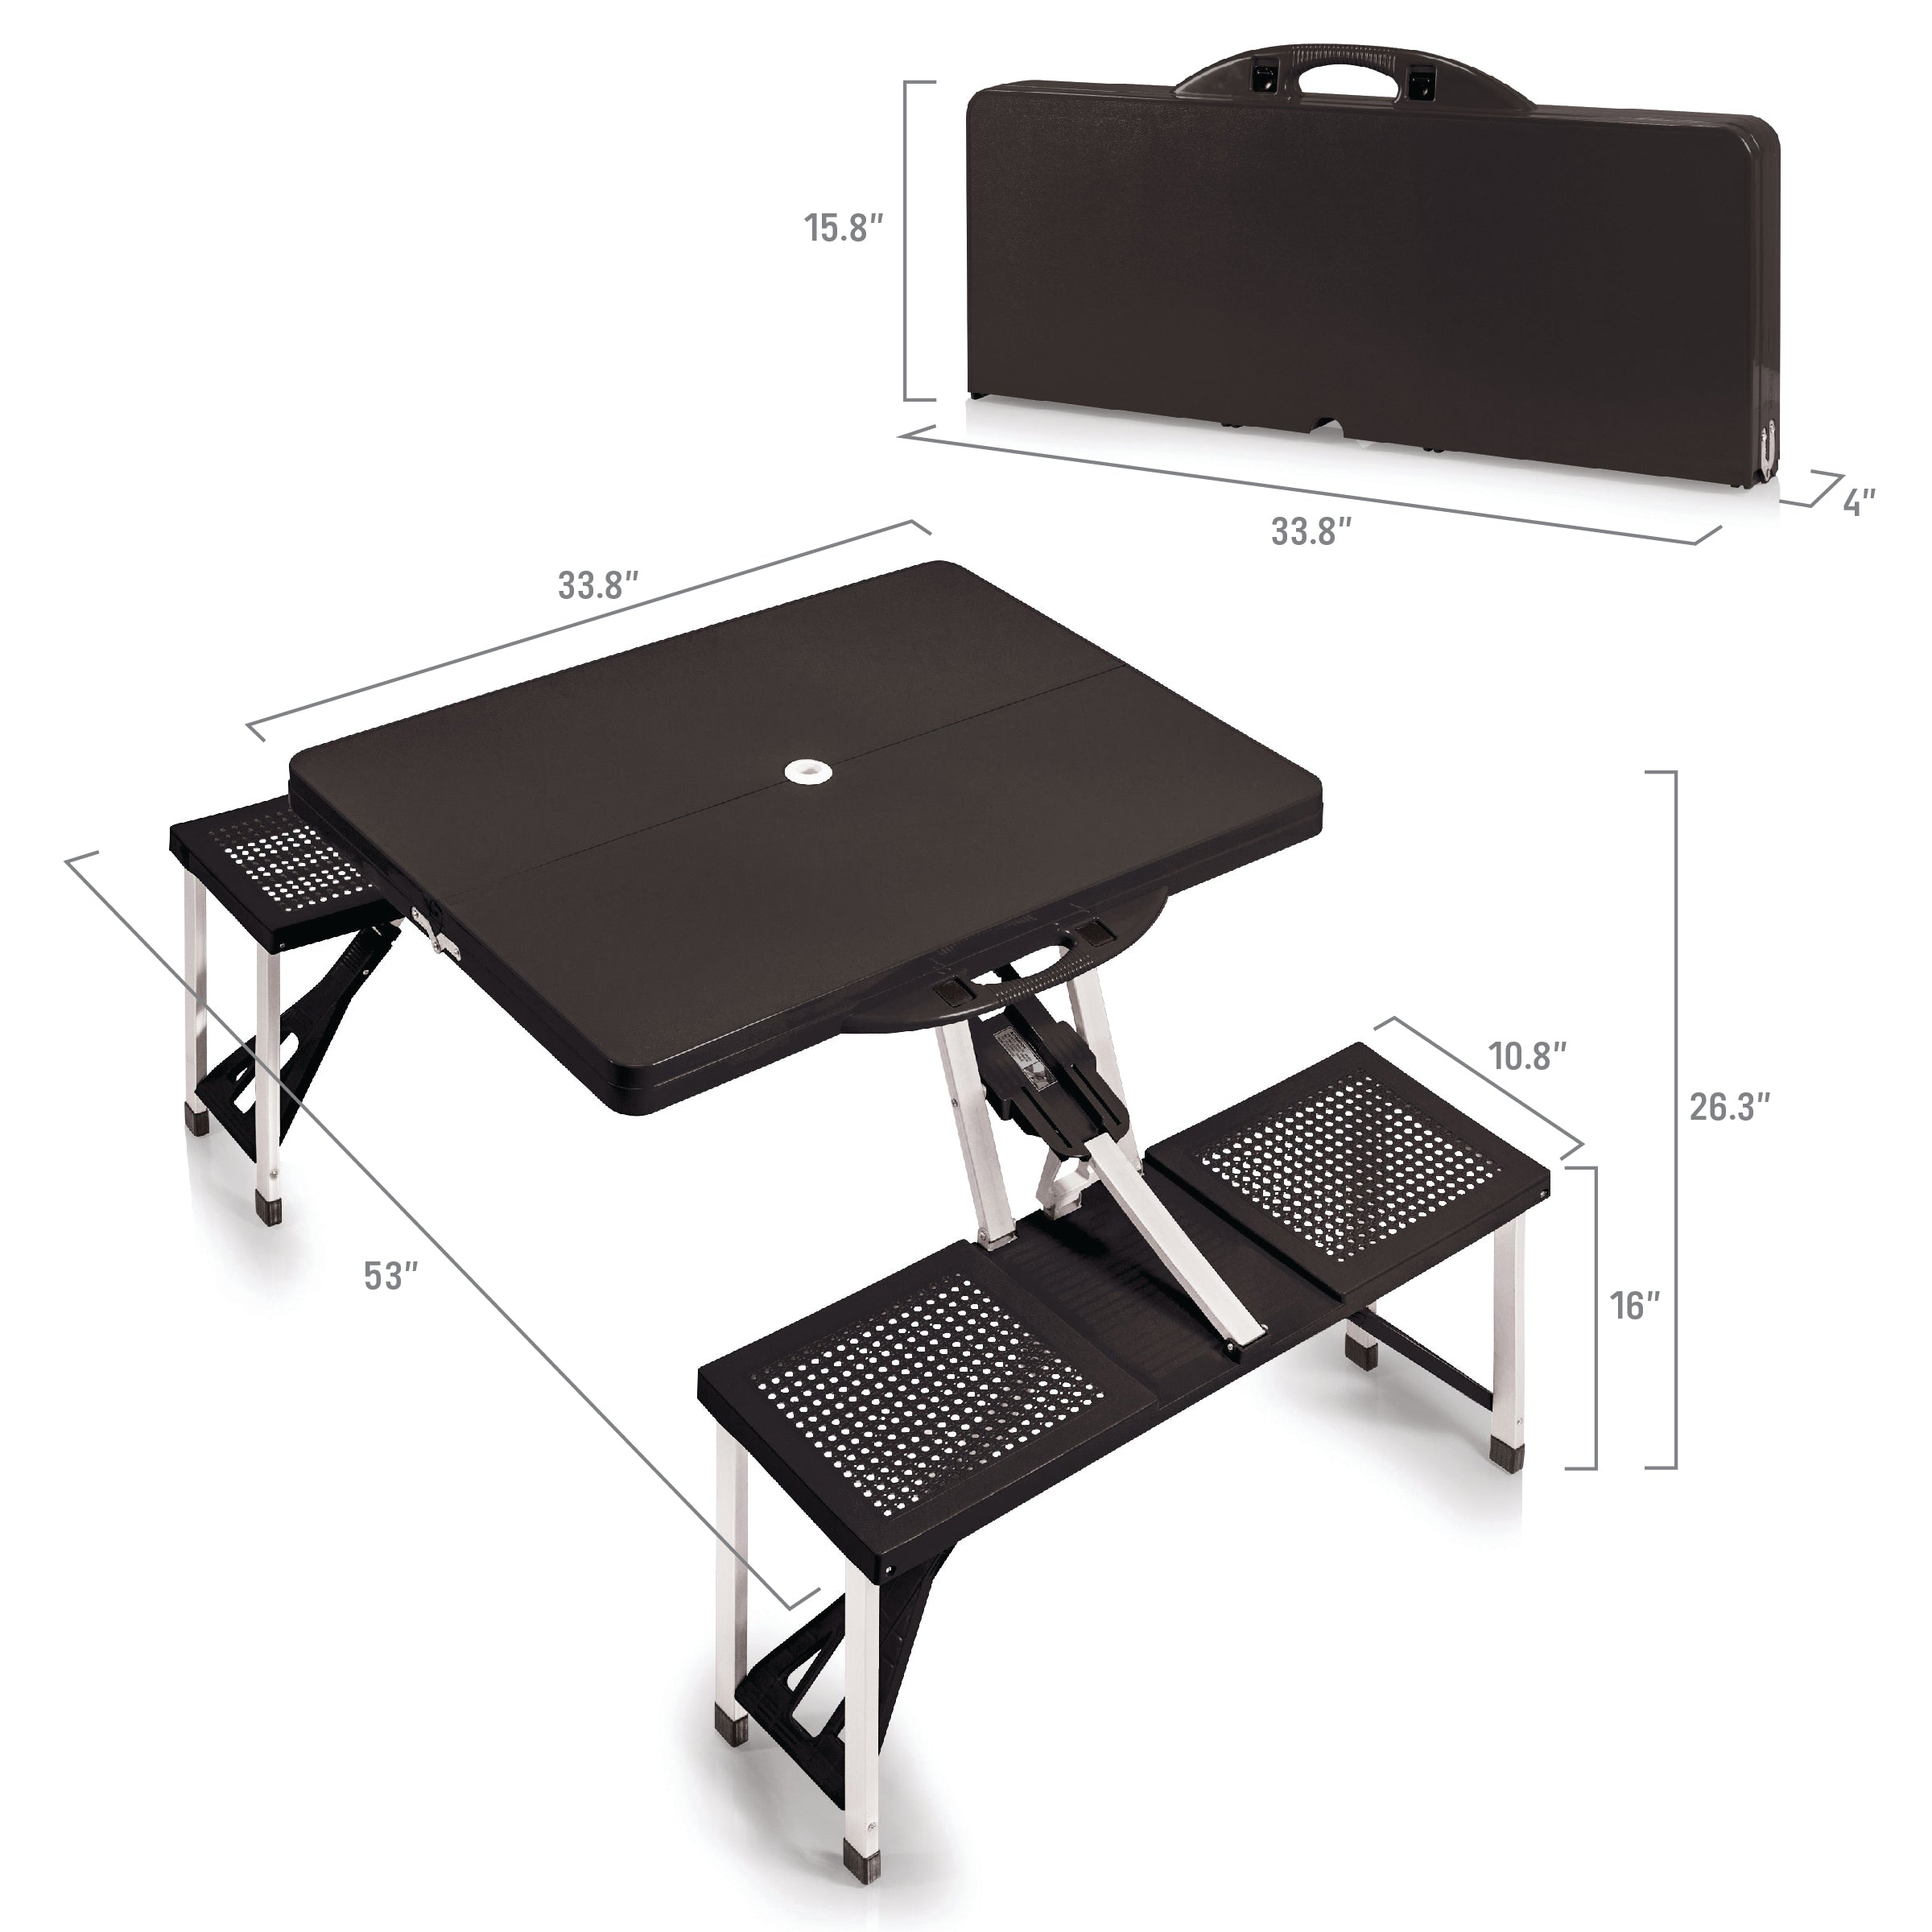 Football Field - South Carolina Gamecocks - Picnic Table Portable Folding Table with Seats